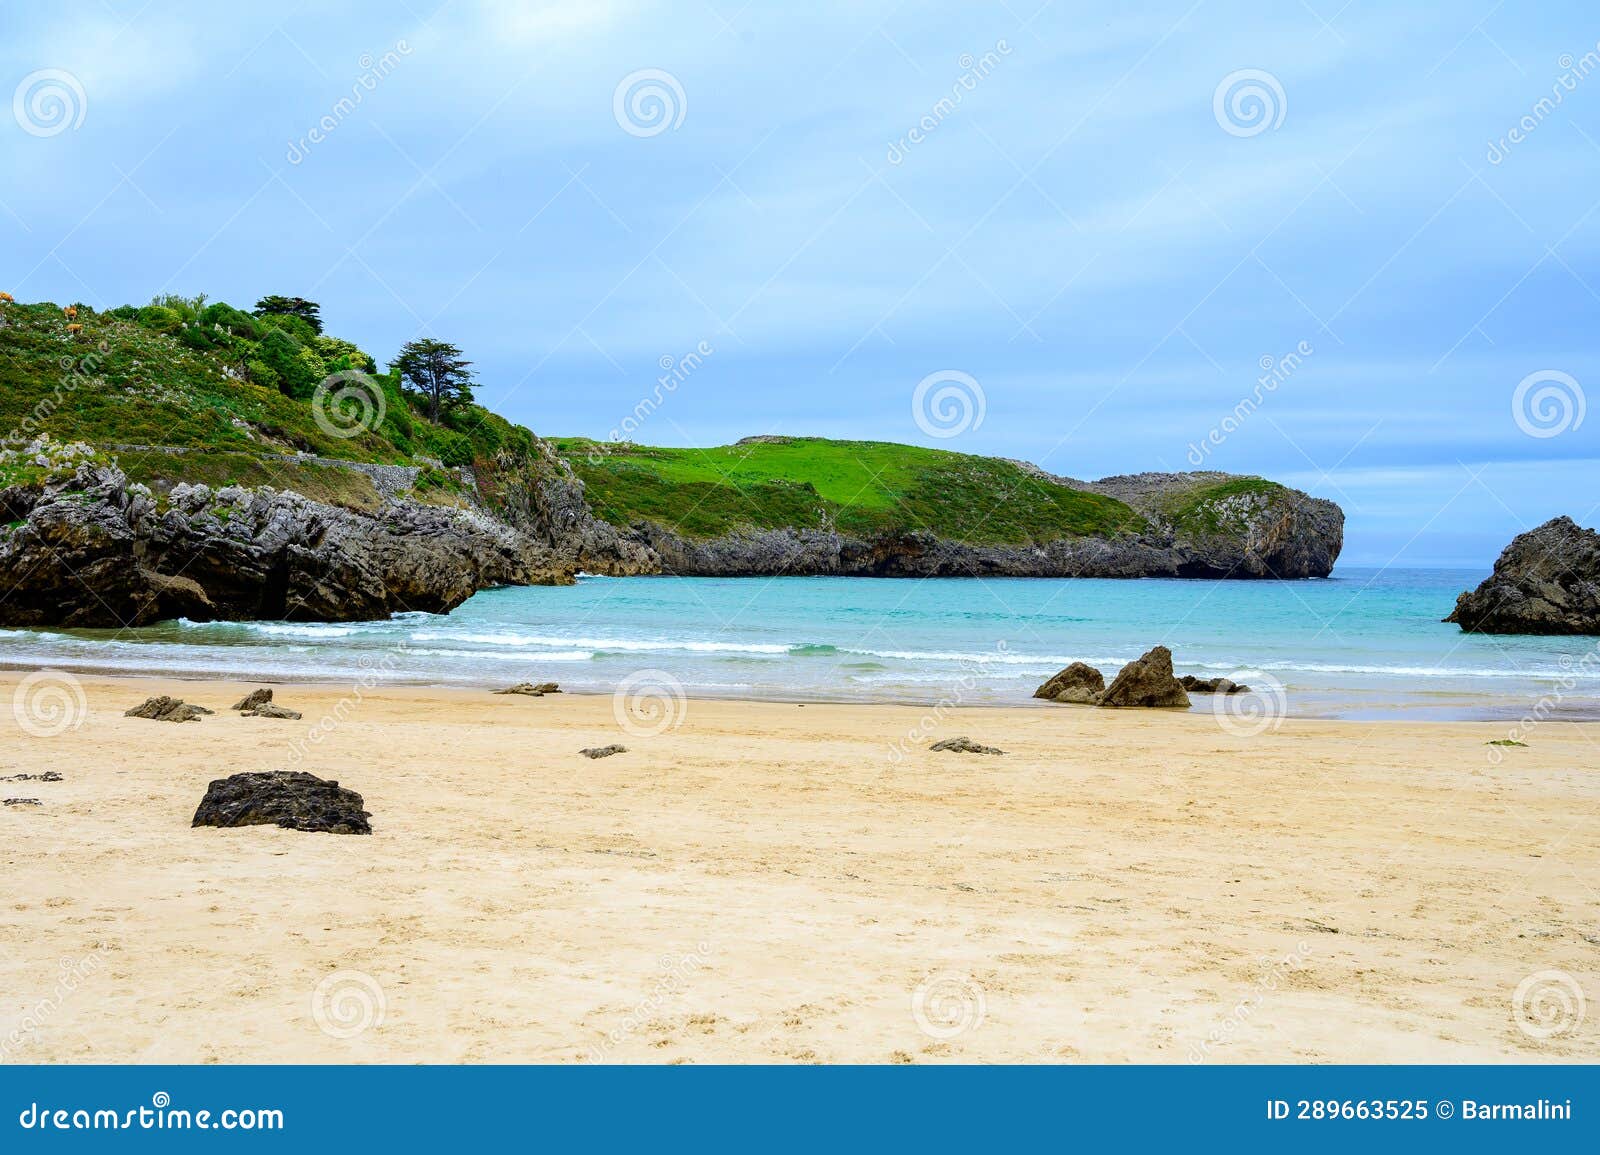 view on playa de borizo in celorio, green coast of asturias, north spain with sandy beaches, cliffs, hidden caves, green fields